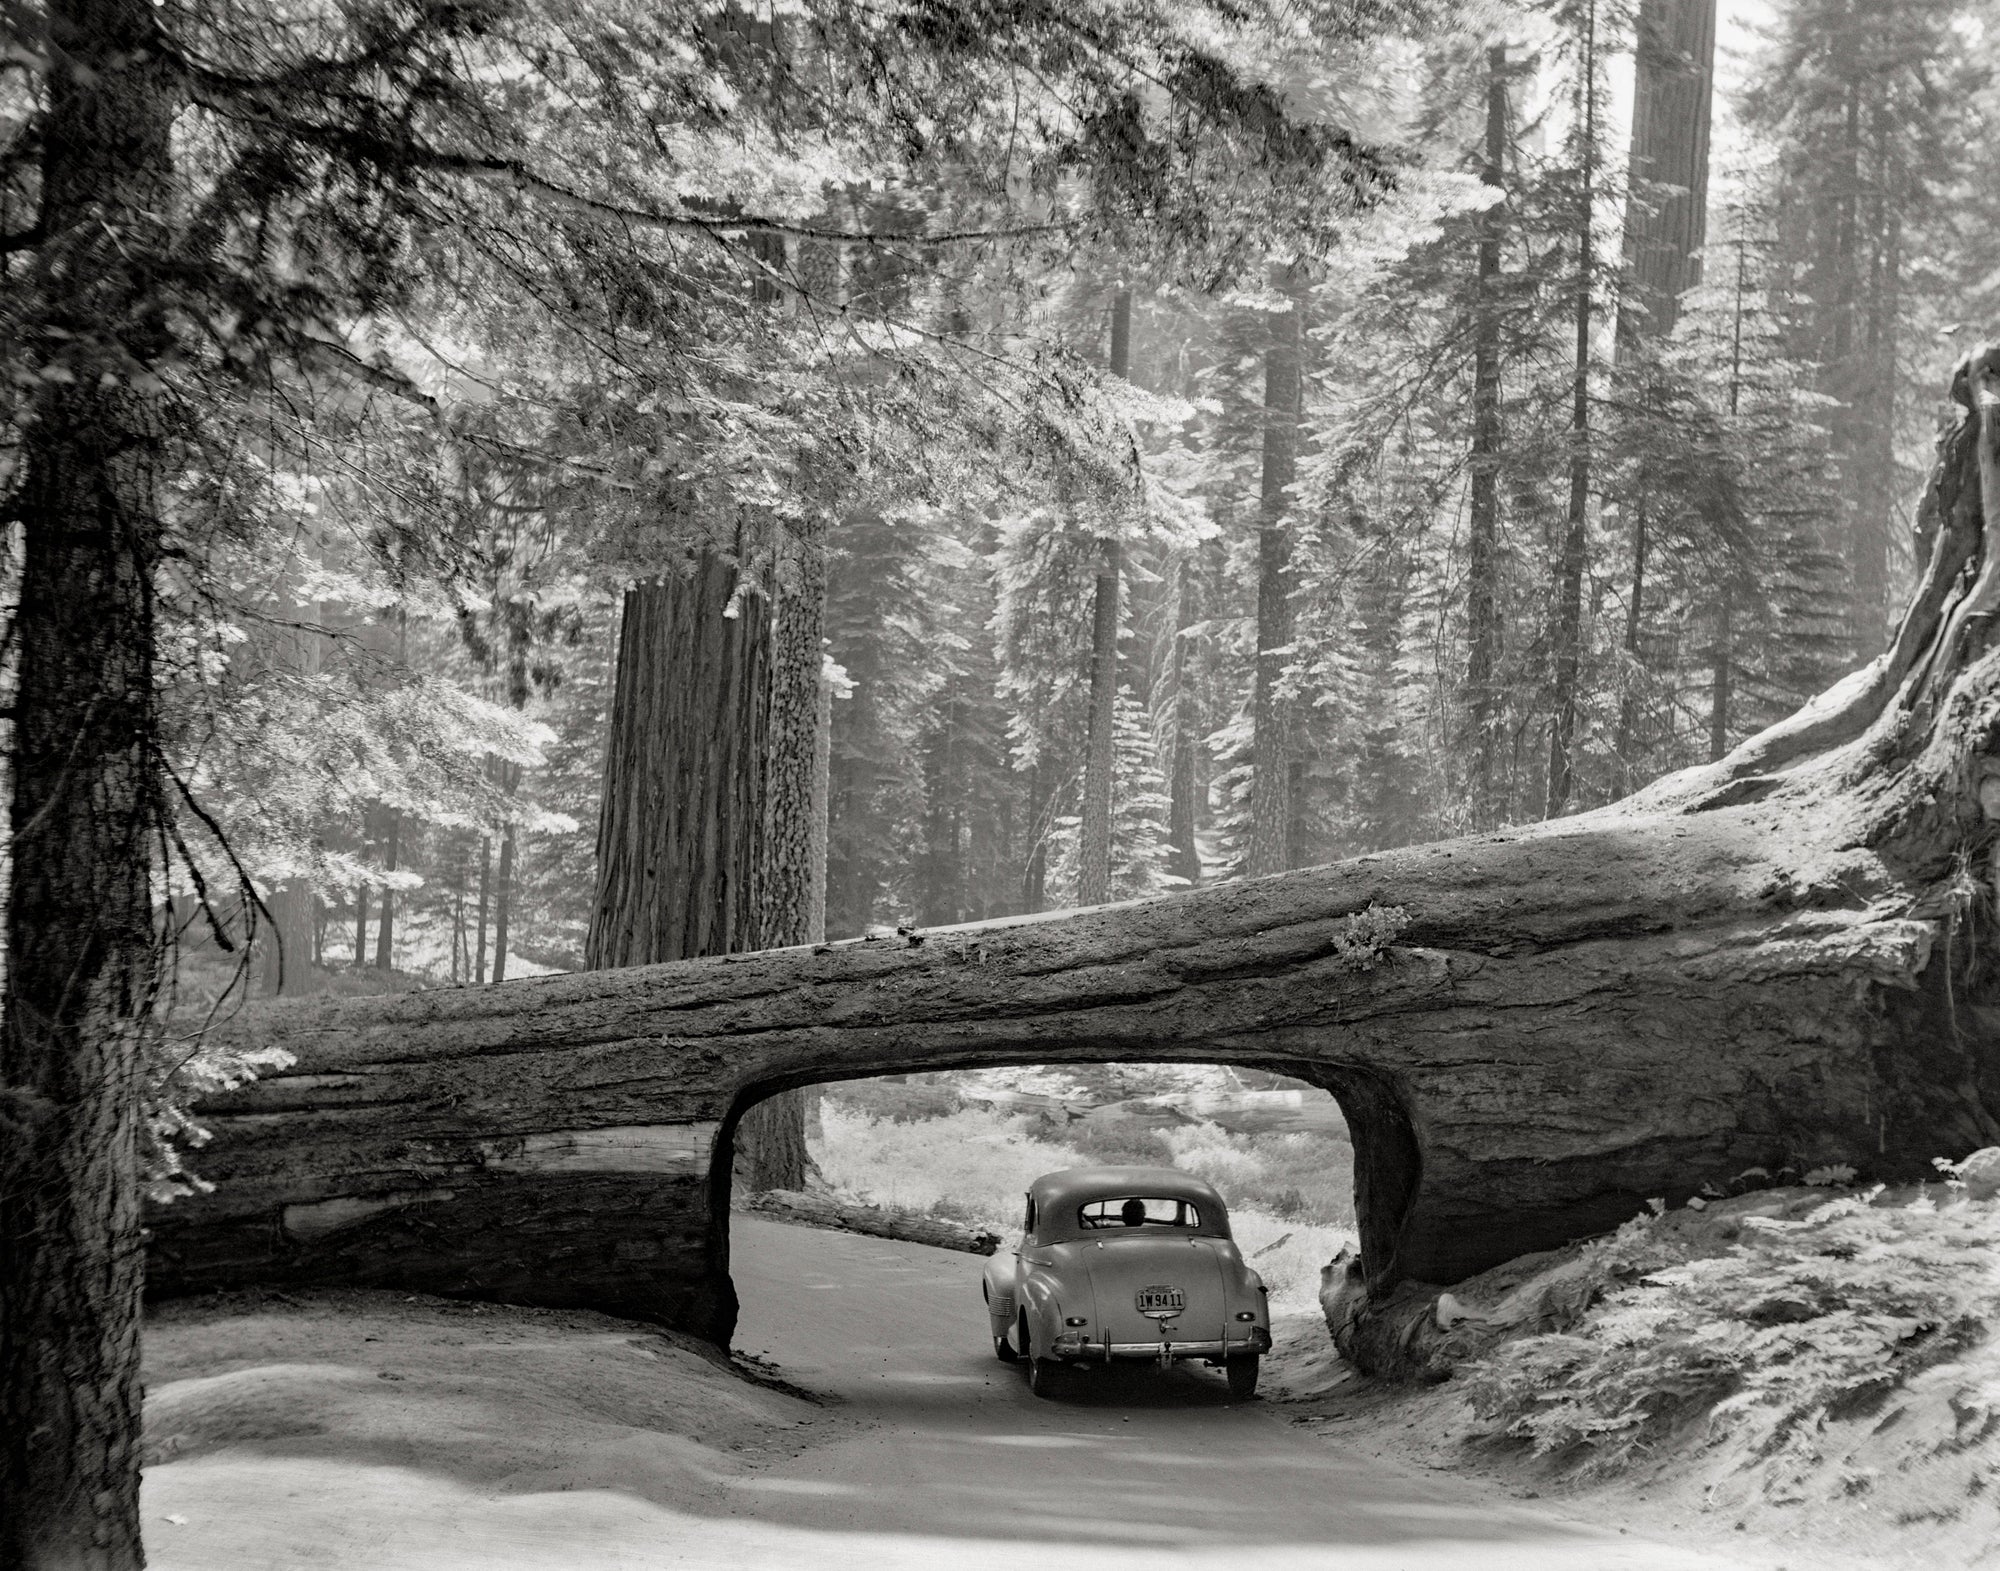 Giant Sequoia Tree Photo, Sequoia National Park, 1957 Historical Pix